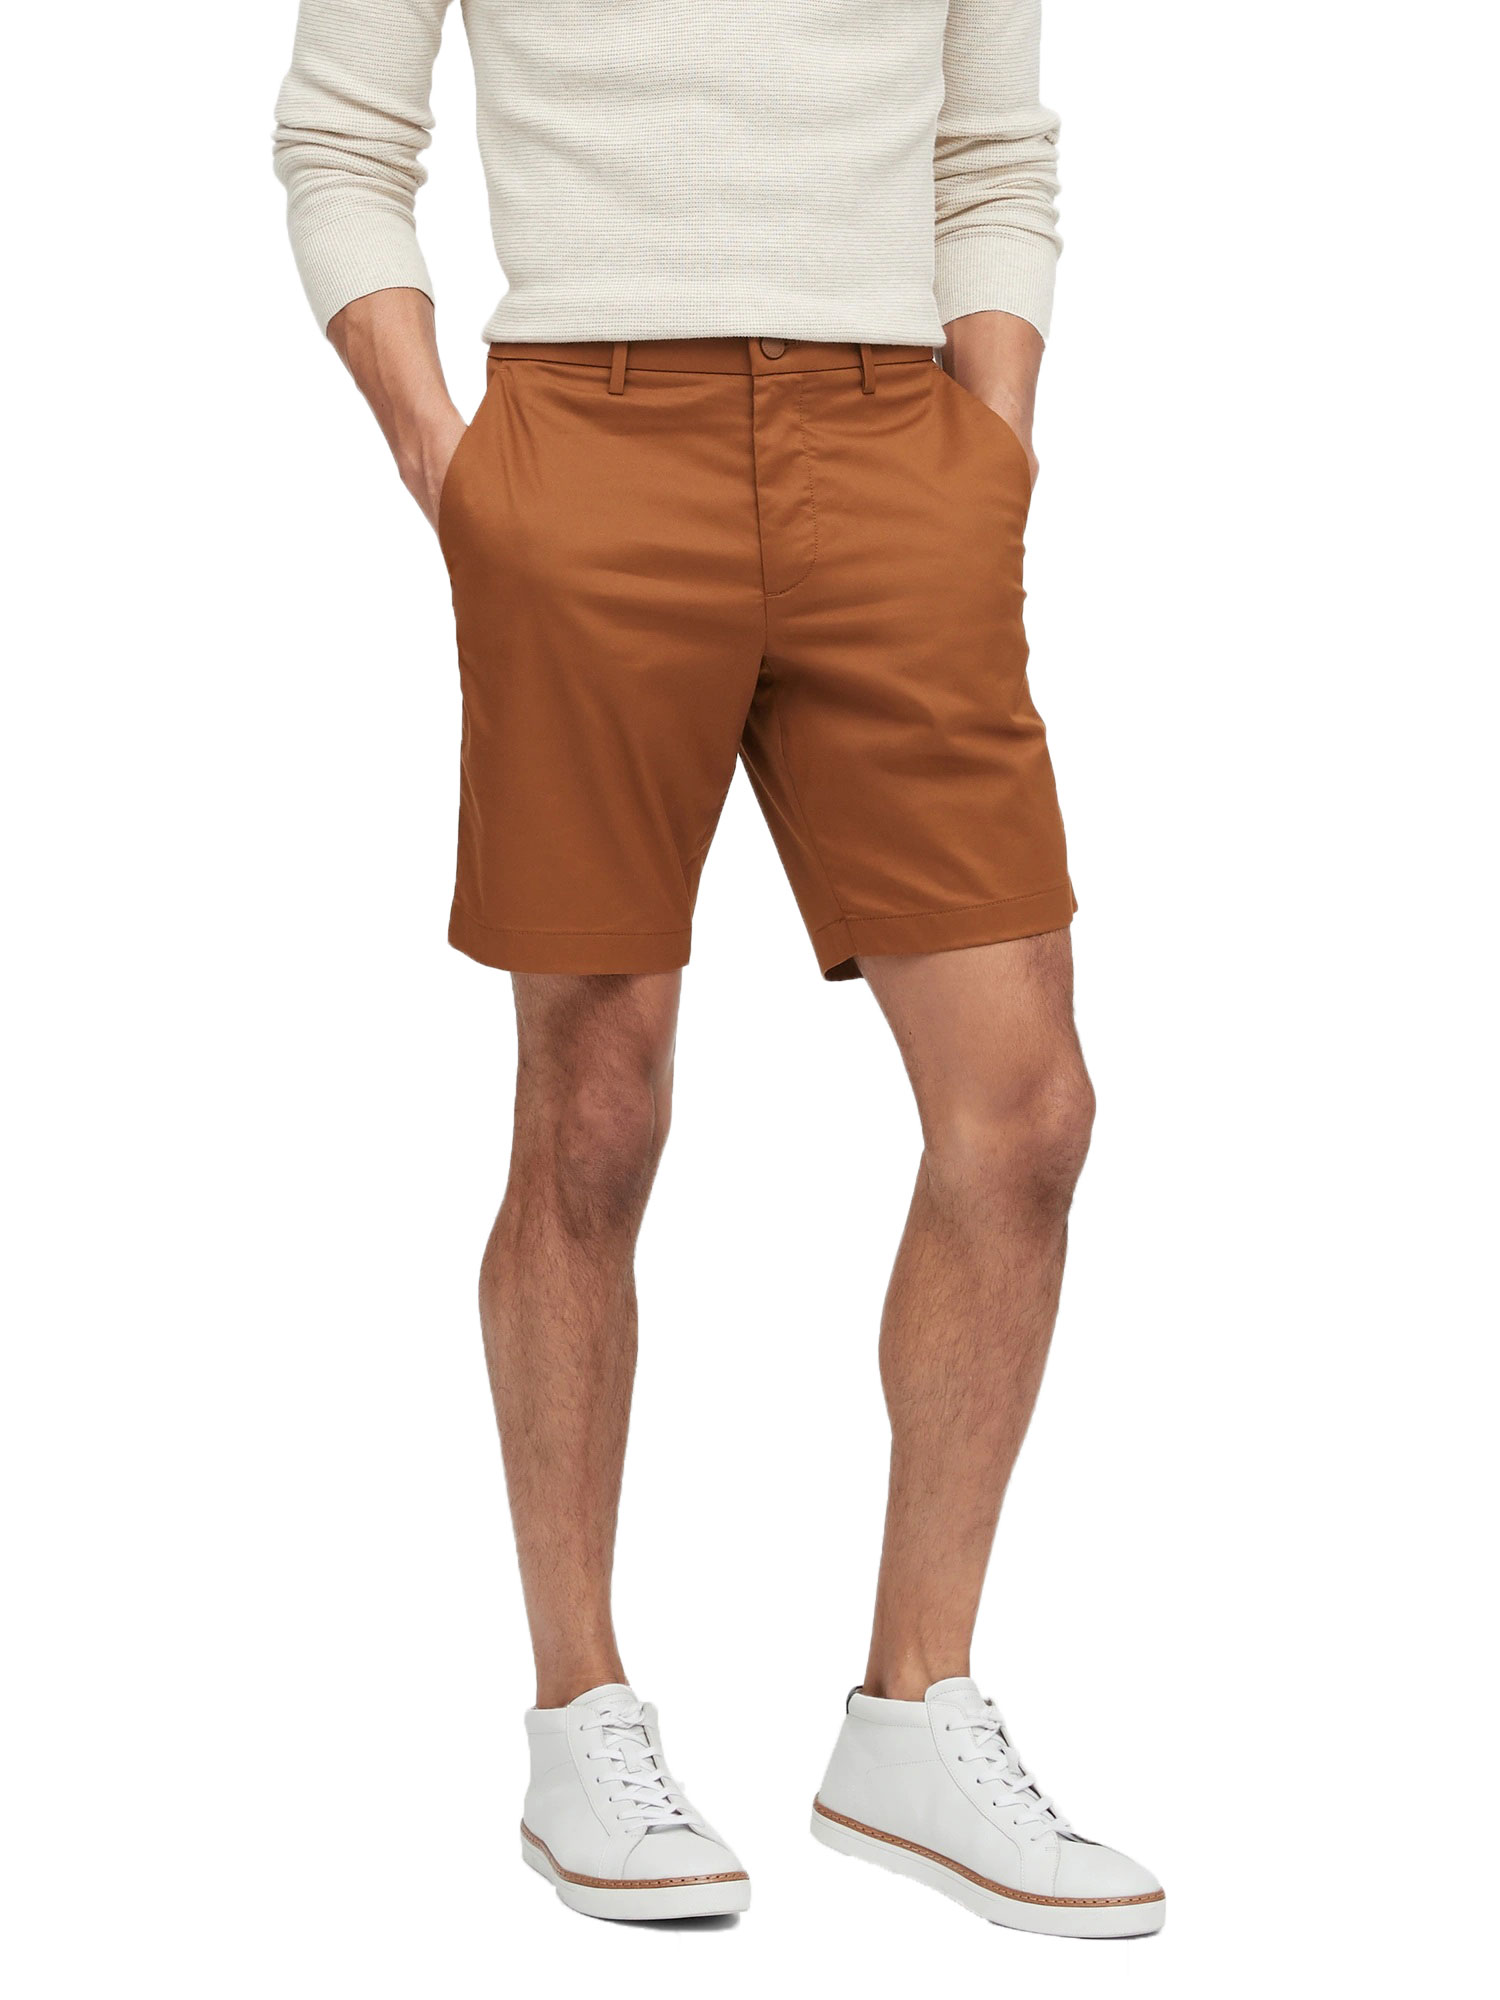 Cotton Mens Shorts